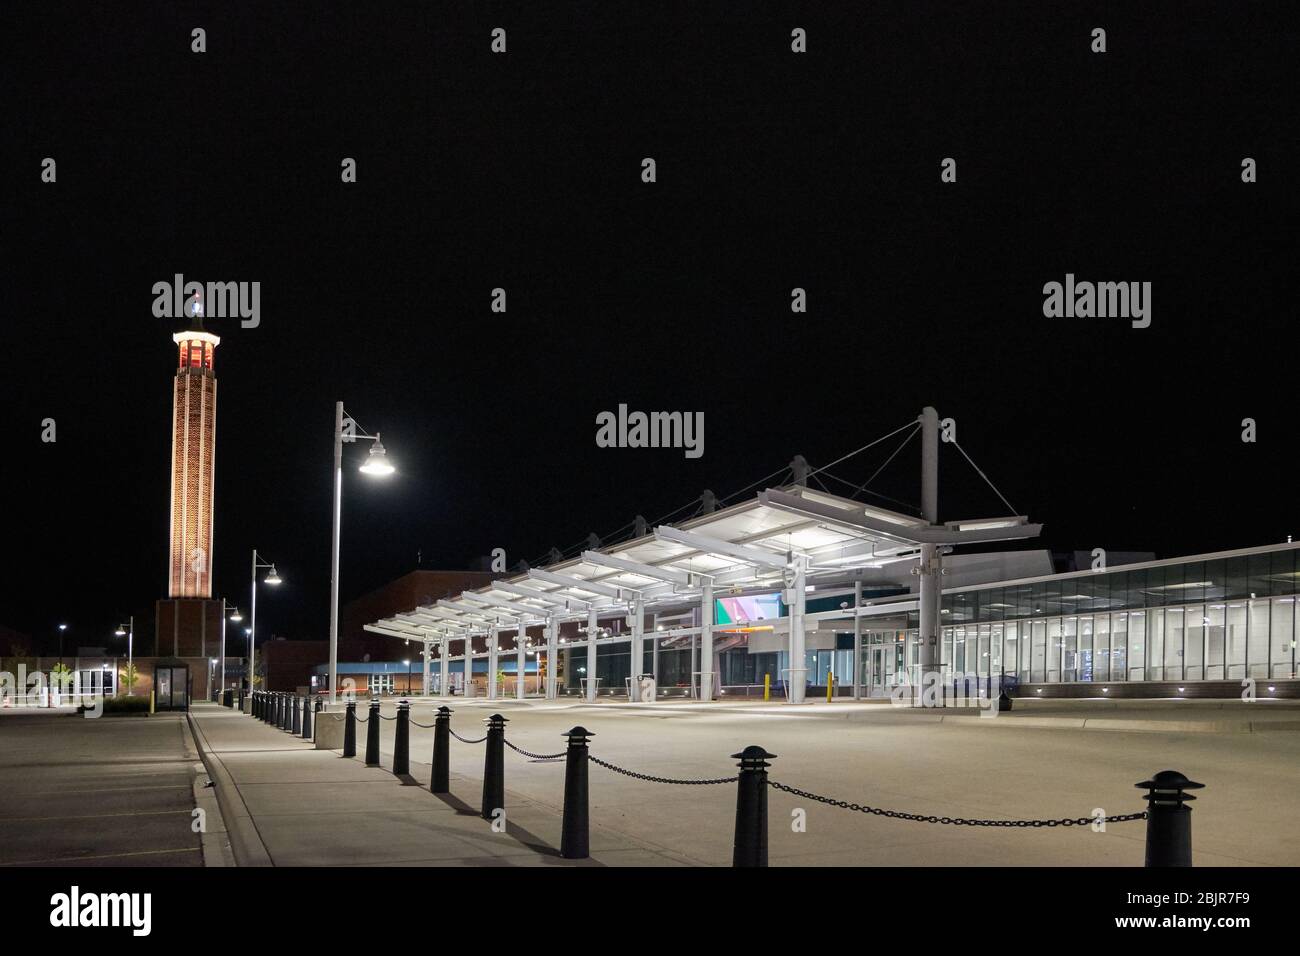 Exterior view of municipal bus transportation terminal in Port Huron, Michigan at night Stock Photo